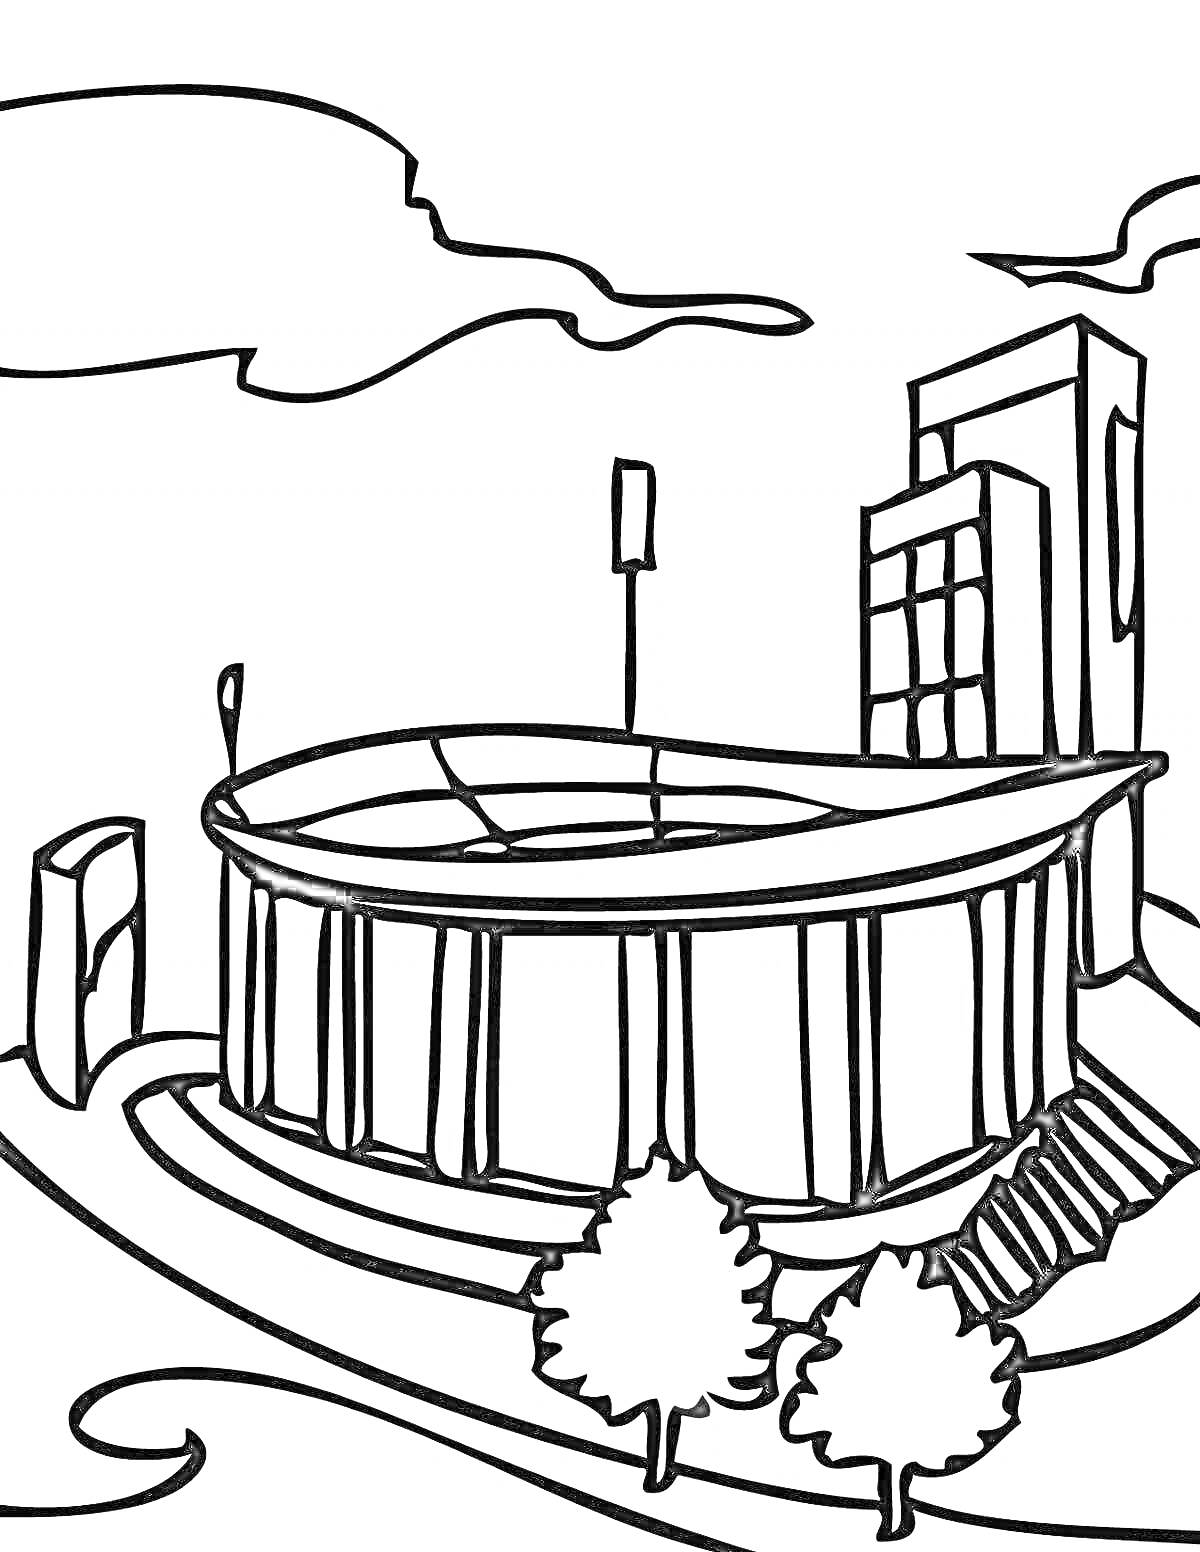 На раскраске изображено: Стадион, Облака, Высокое здание, Архитектура, Спорт